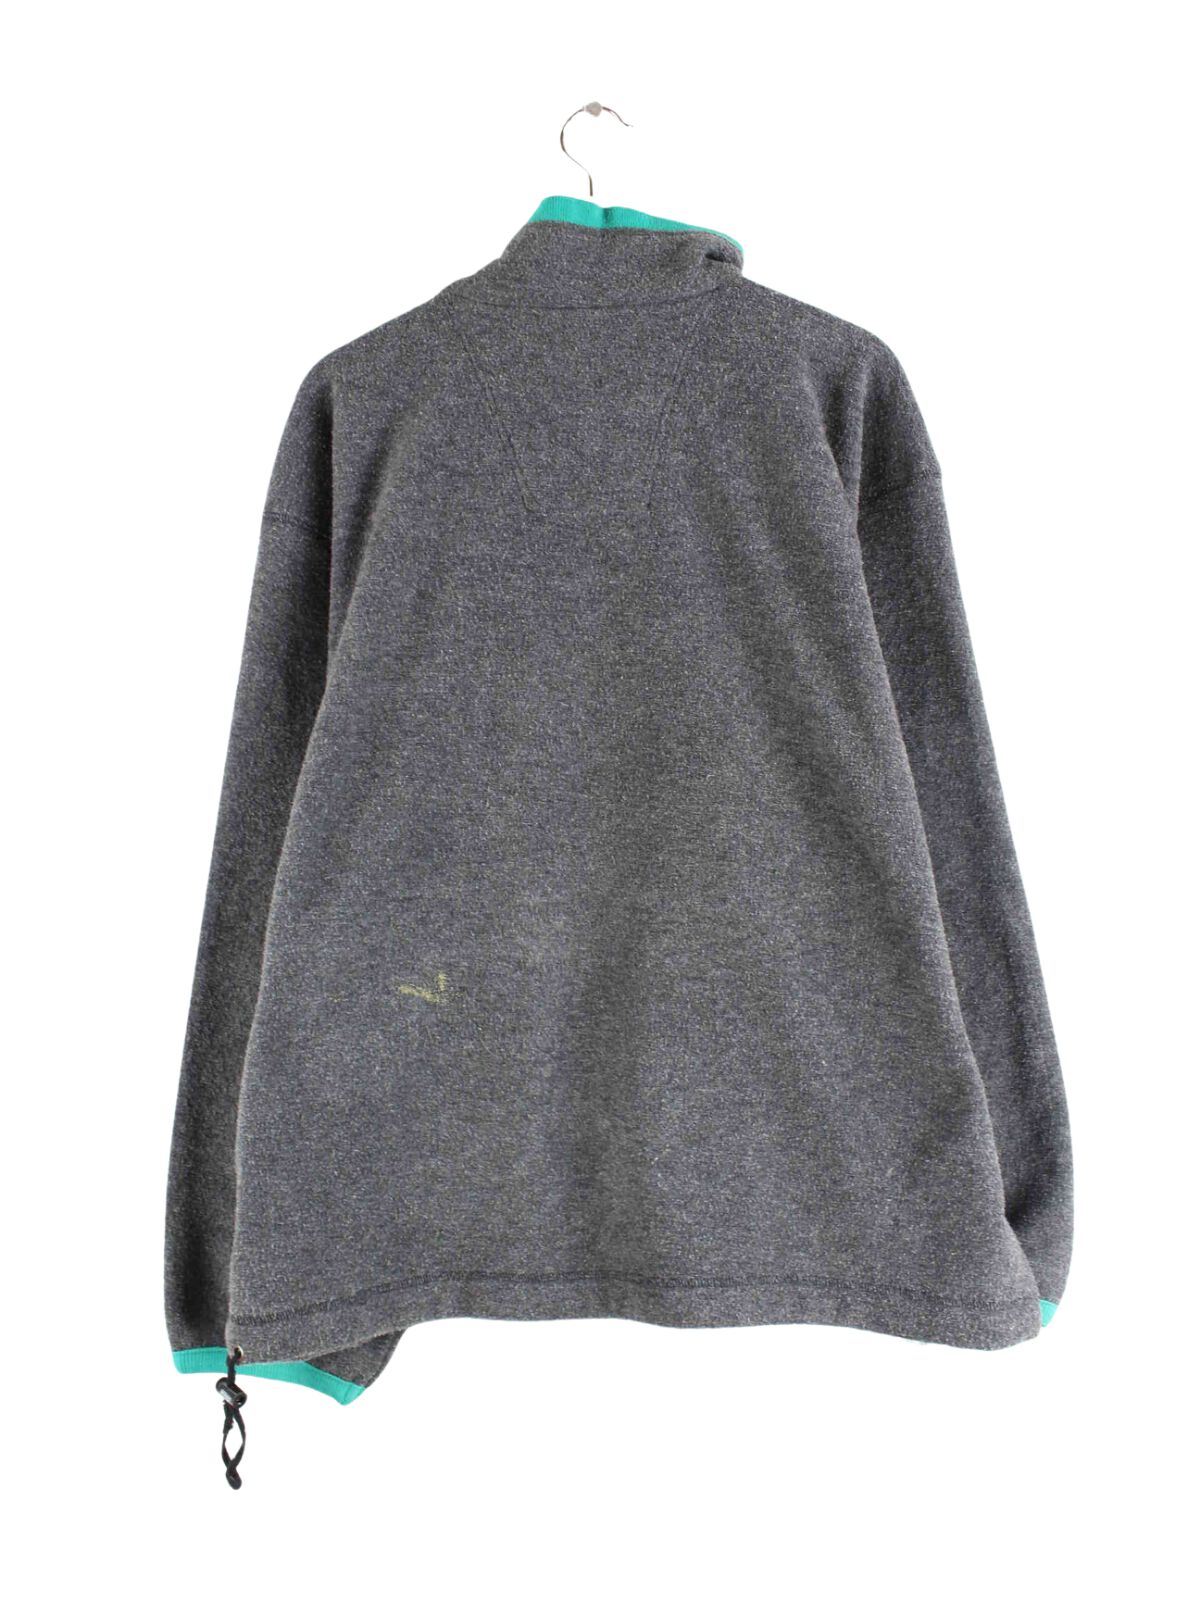 Adidas Equipment 90s Vintage Half Zip Fleece Sweater Grau XL (back image)